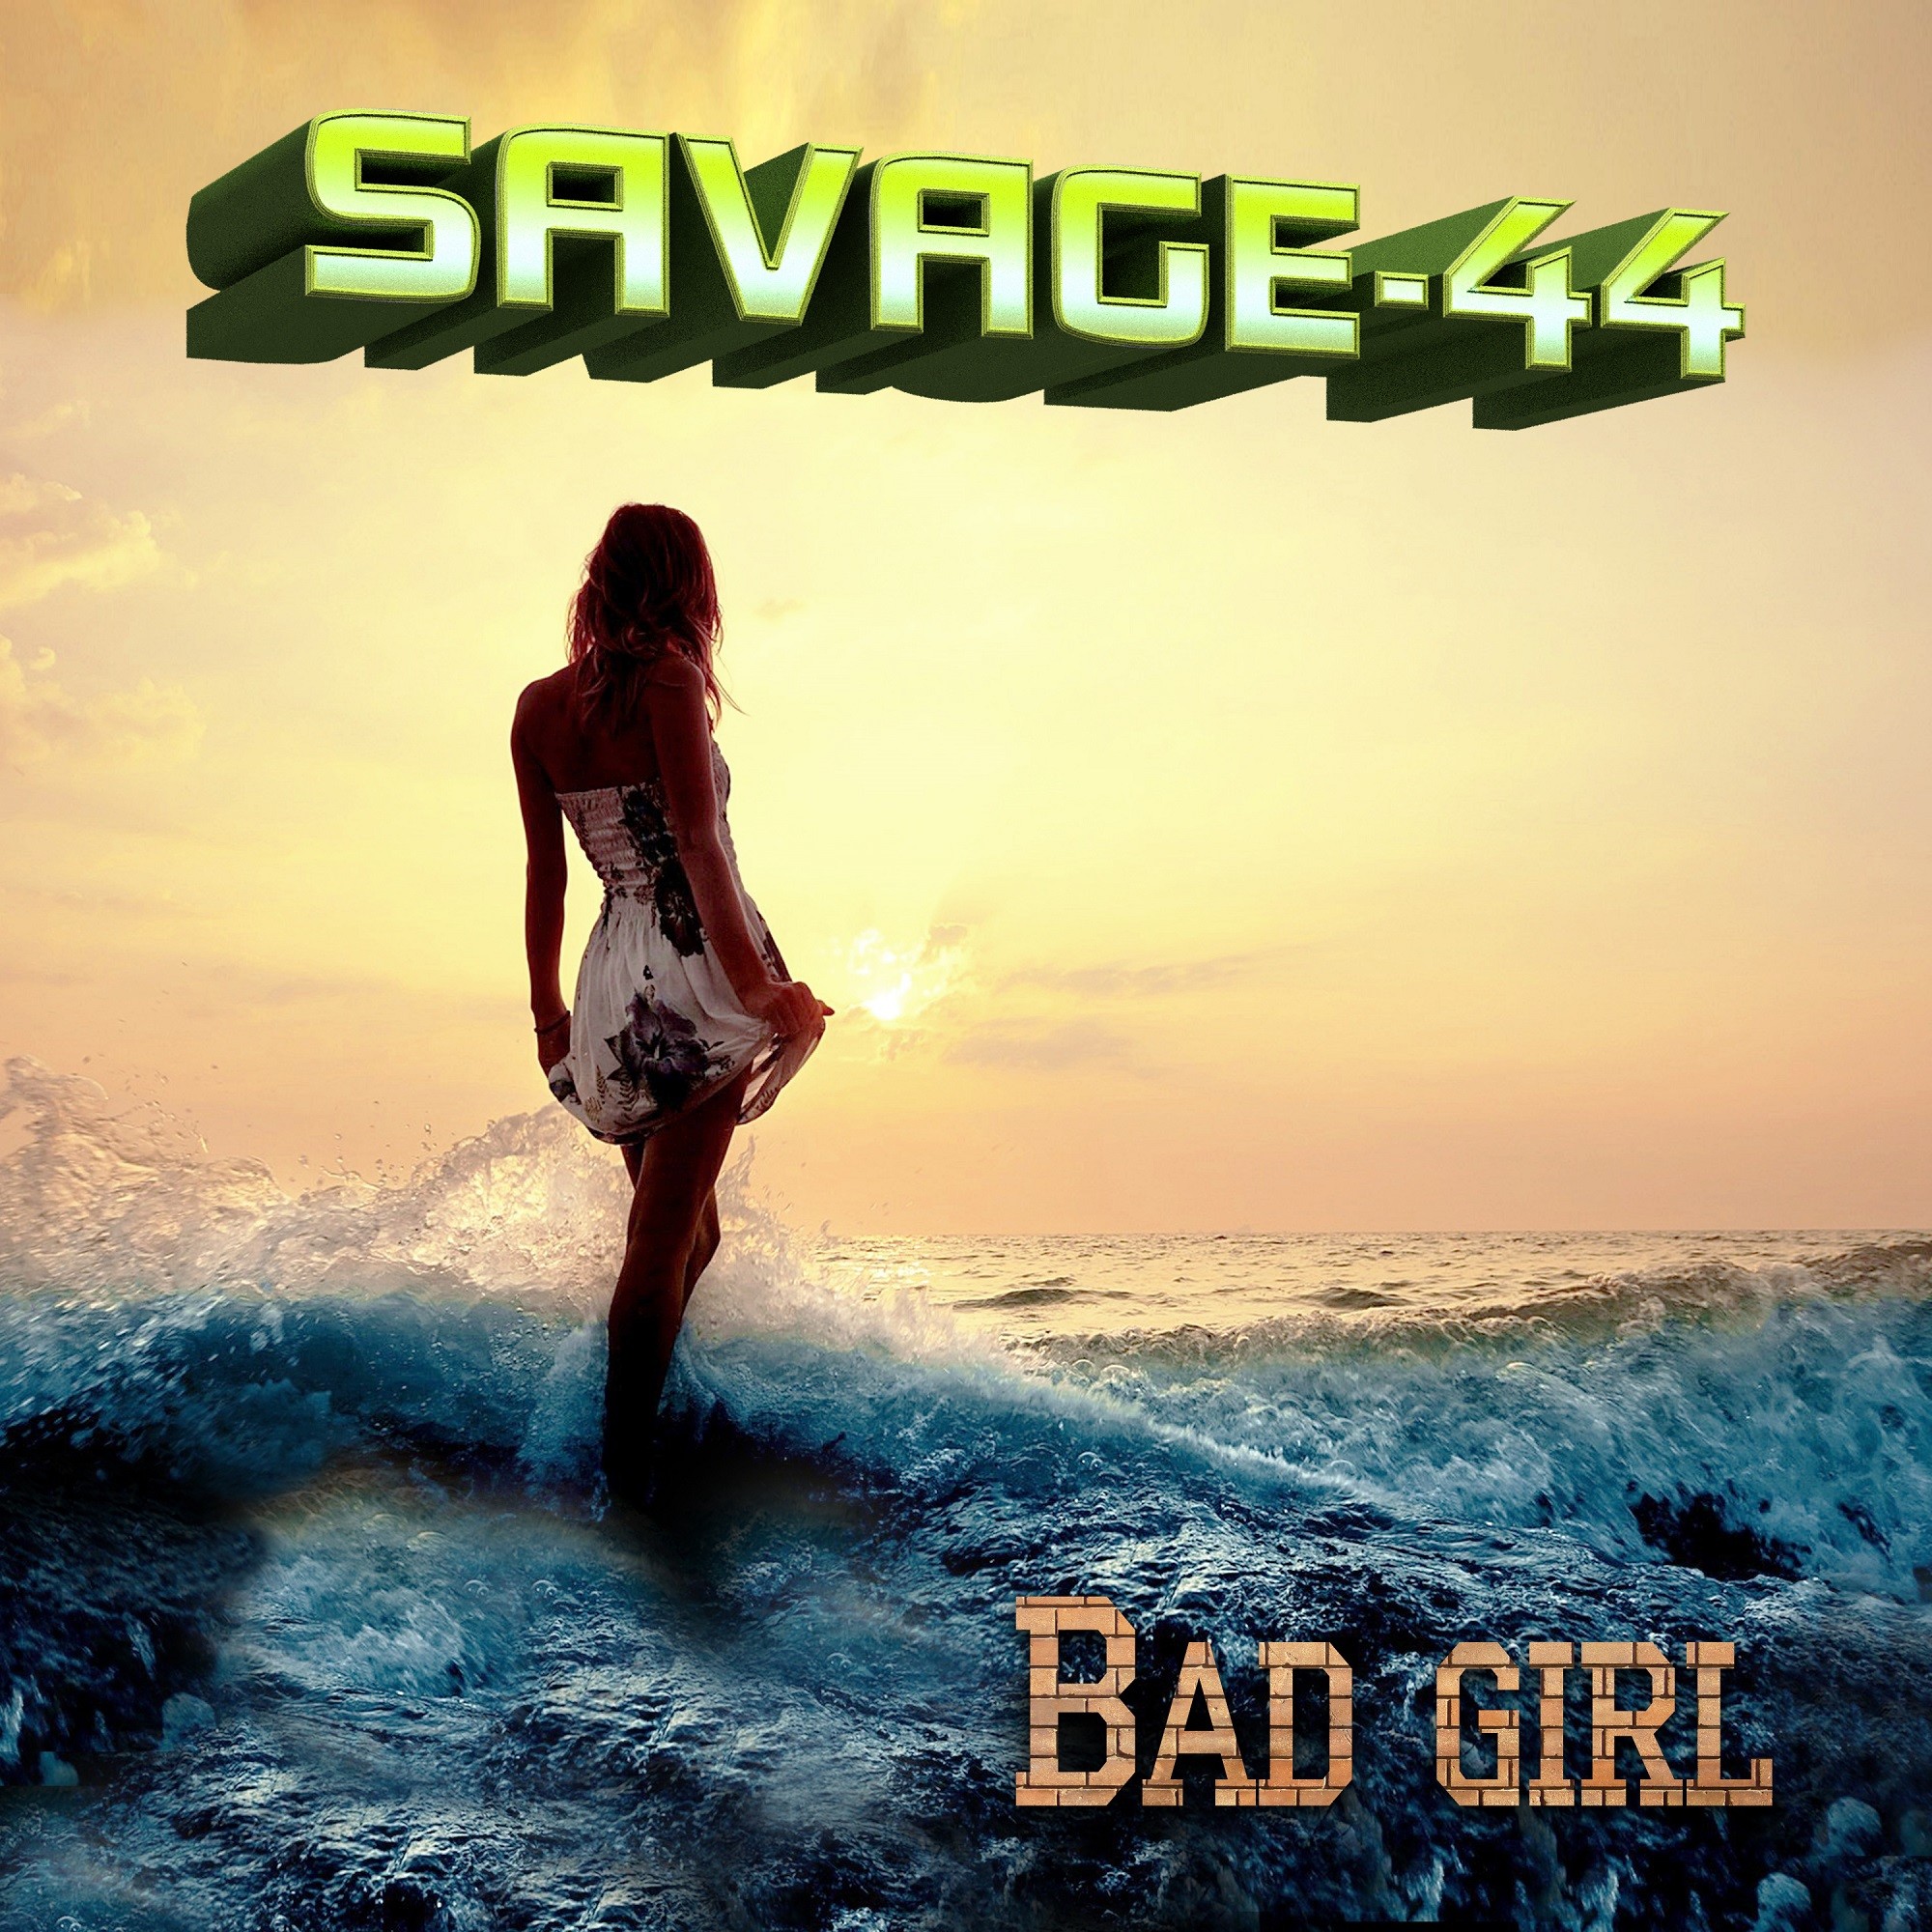 Savage 44 the music ring. Savage 44. Саваж 44 Евроданс. Savage 44 девушки. Savage музыкант.